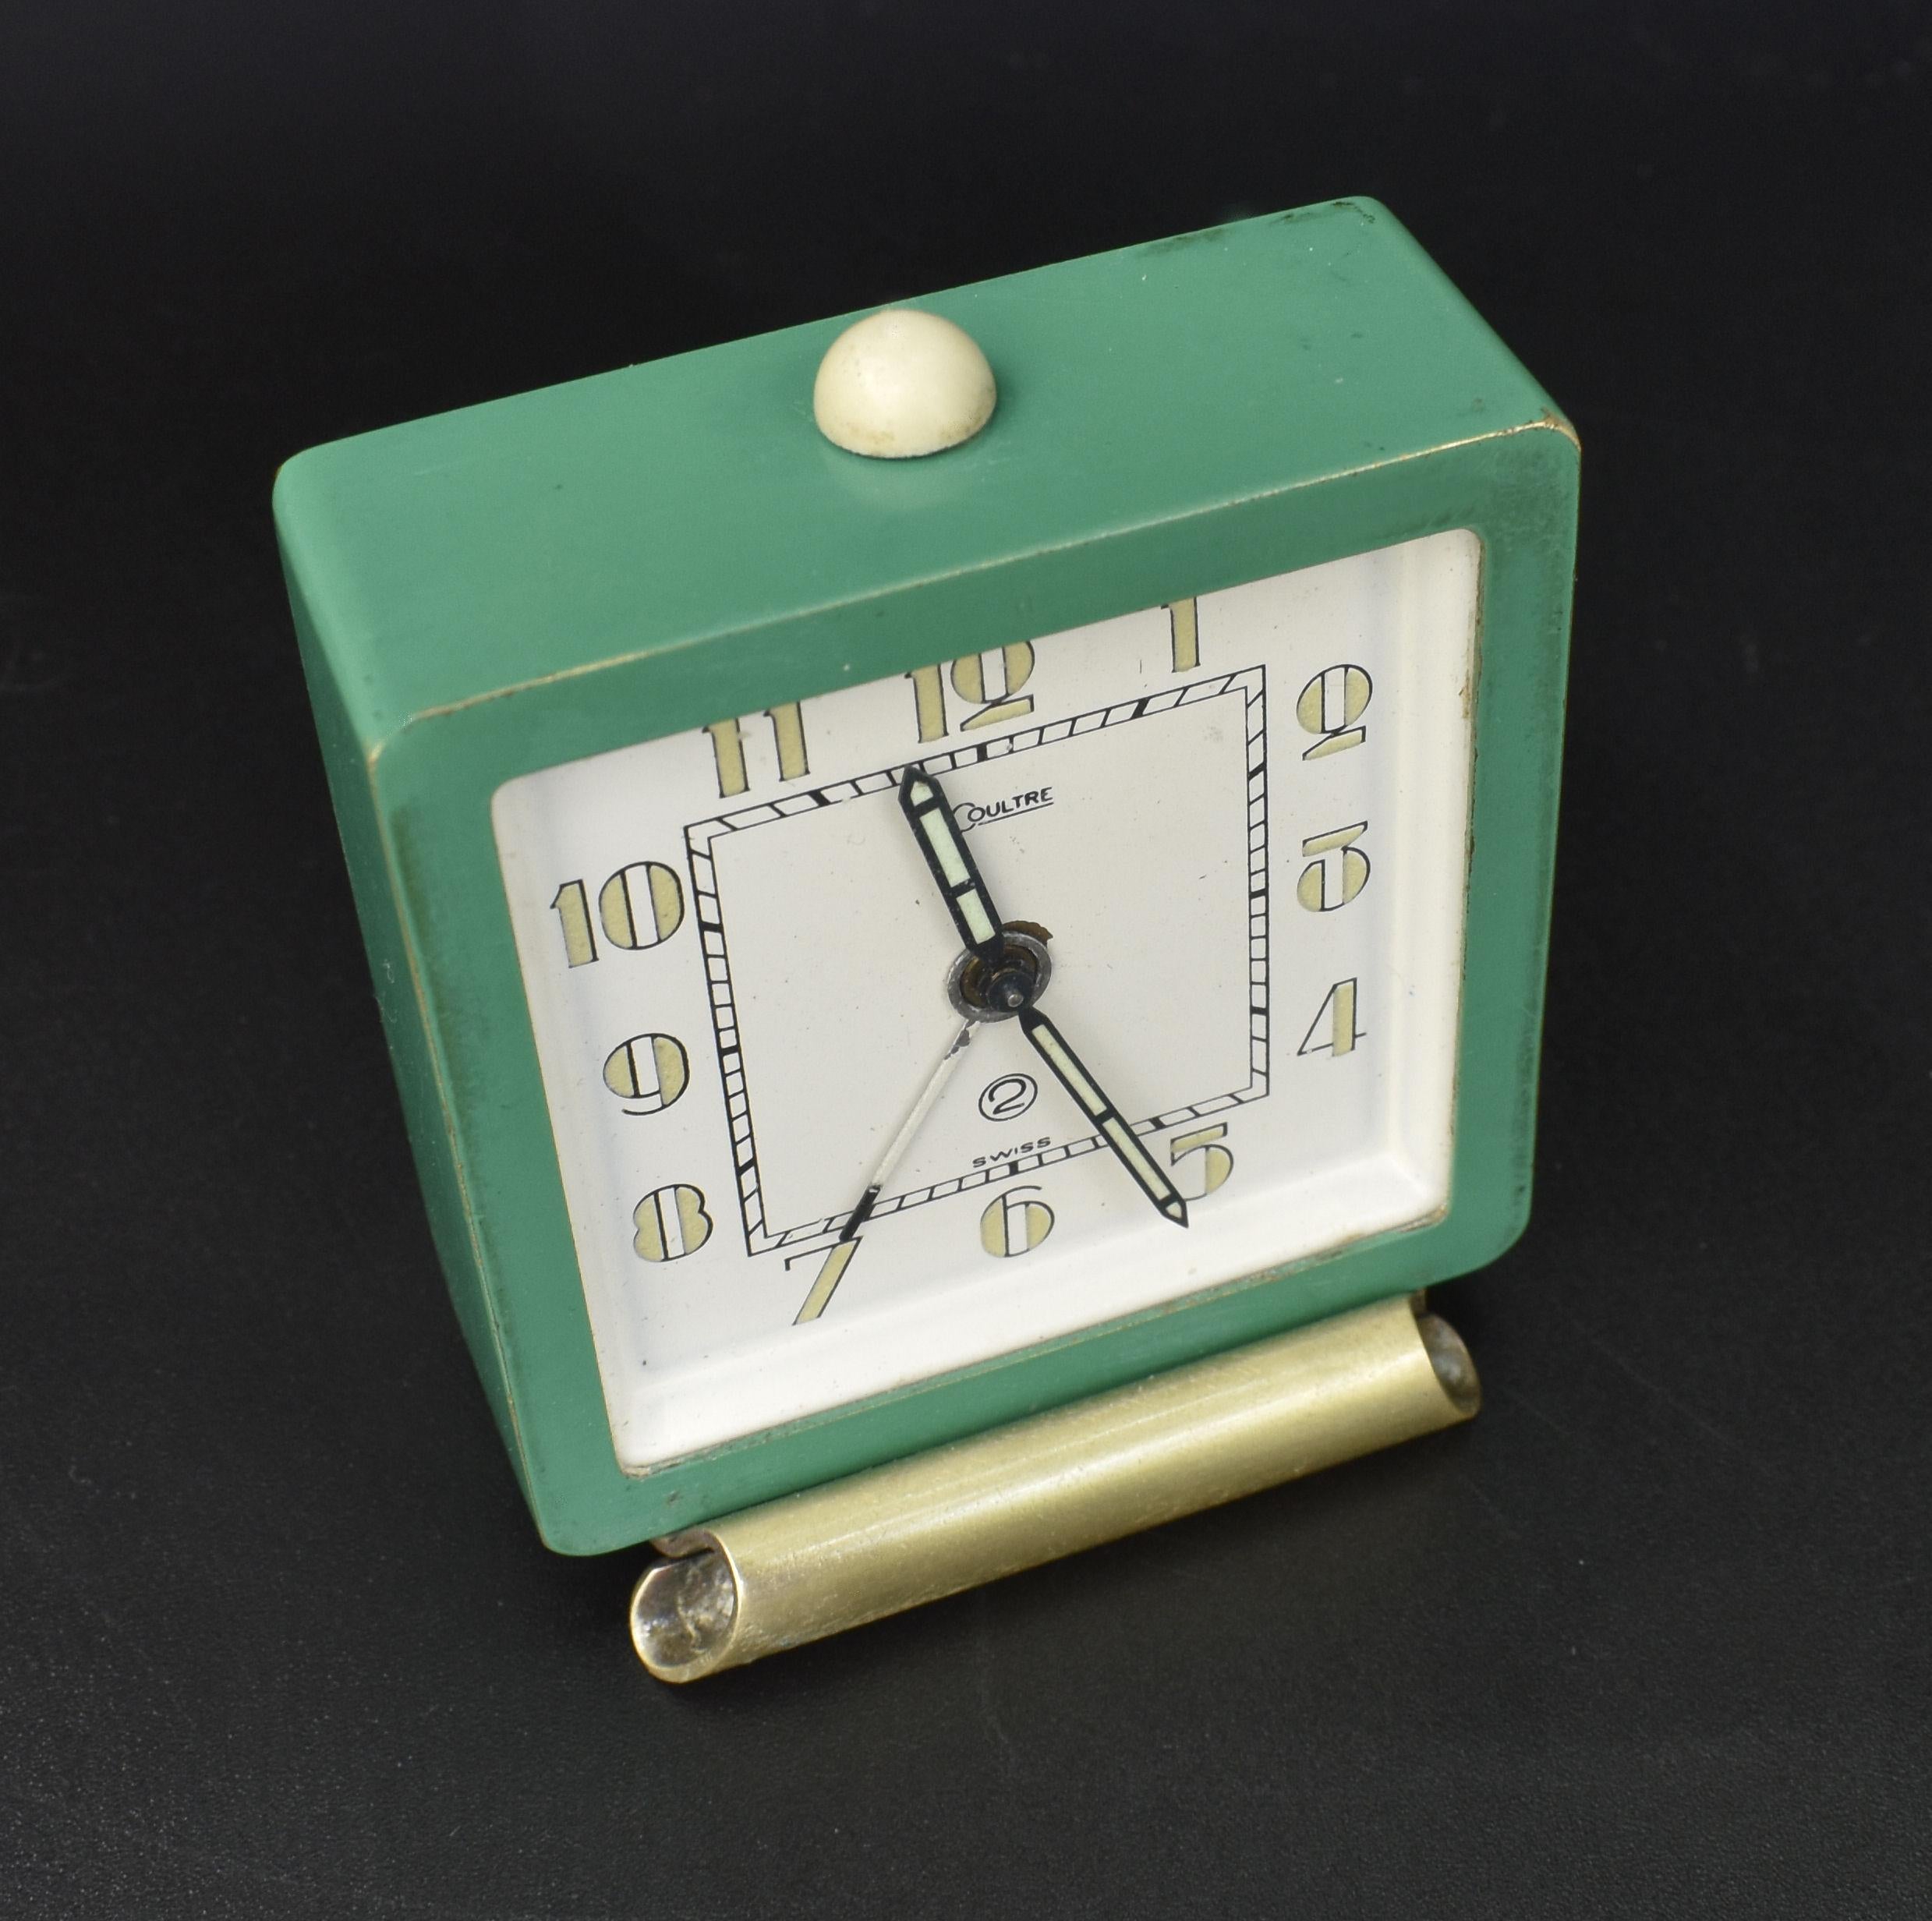 20th Century Art Deco Rare Miniature Alarm Clock by Jaeger-LeCoultre, c1930 For Sale